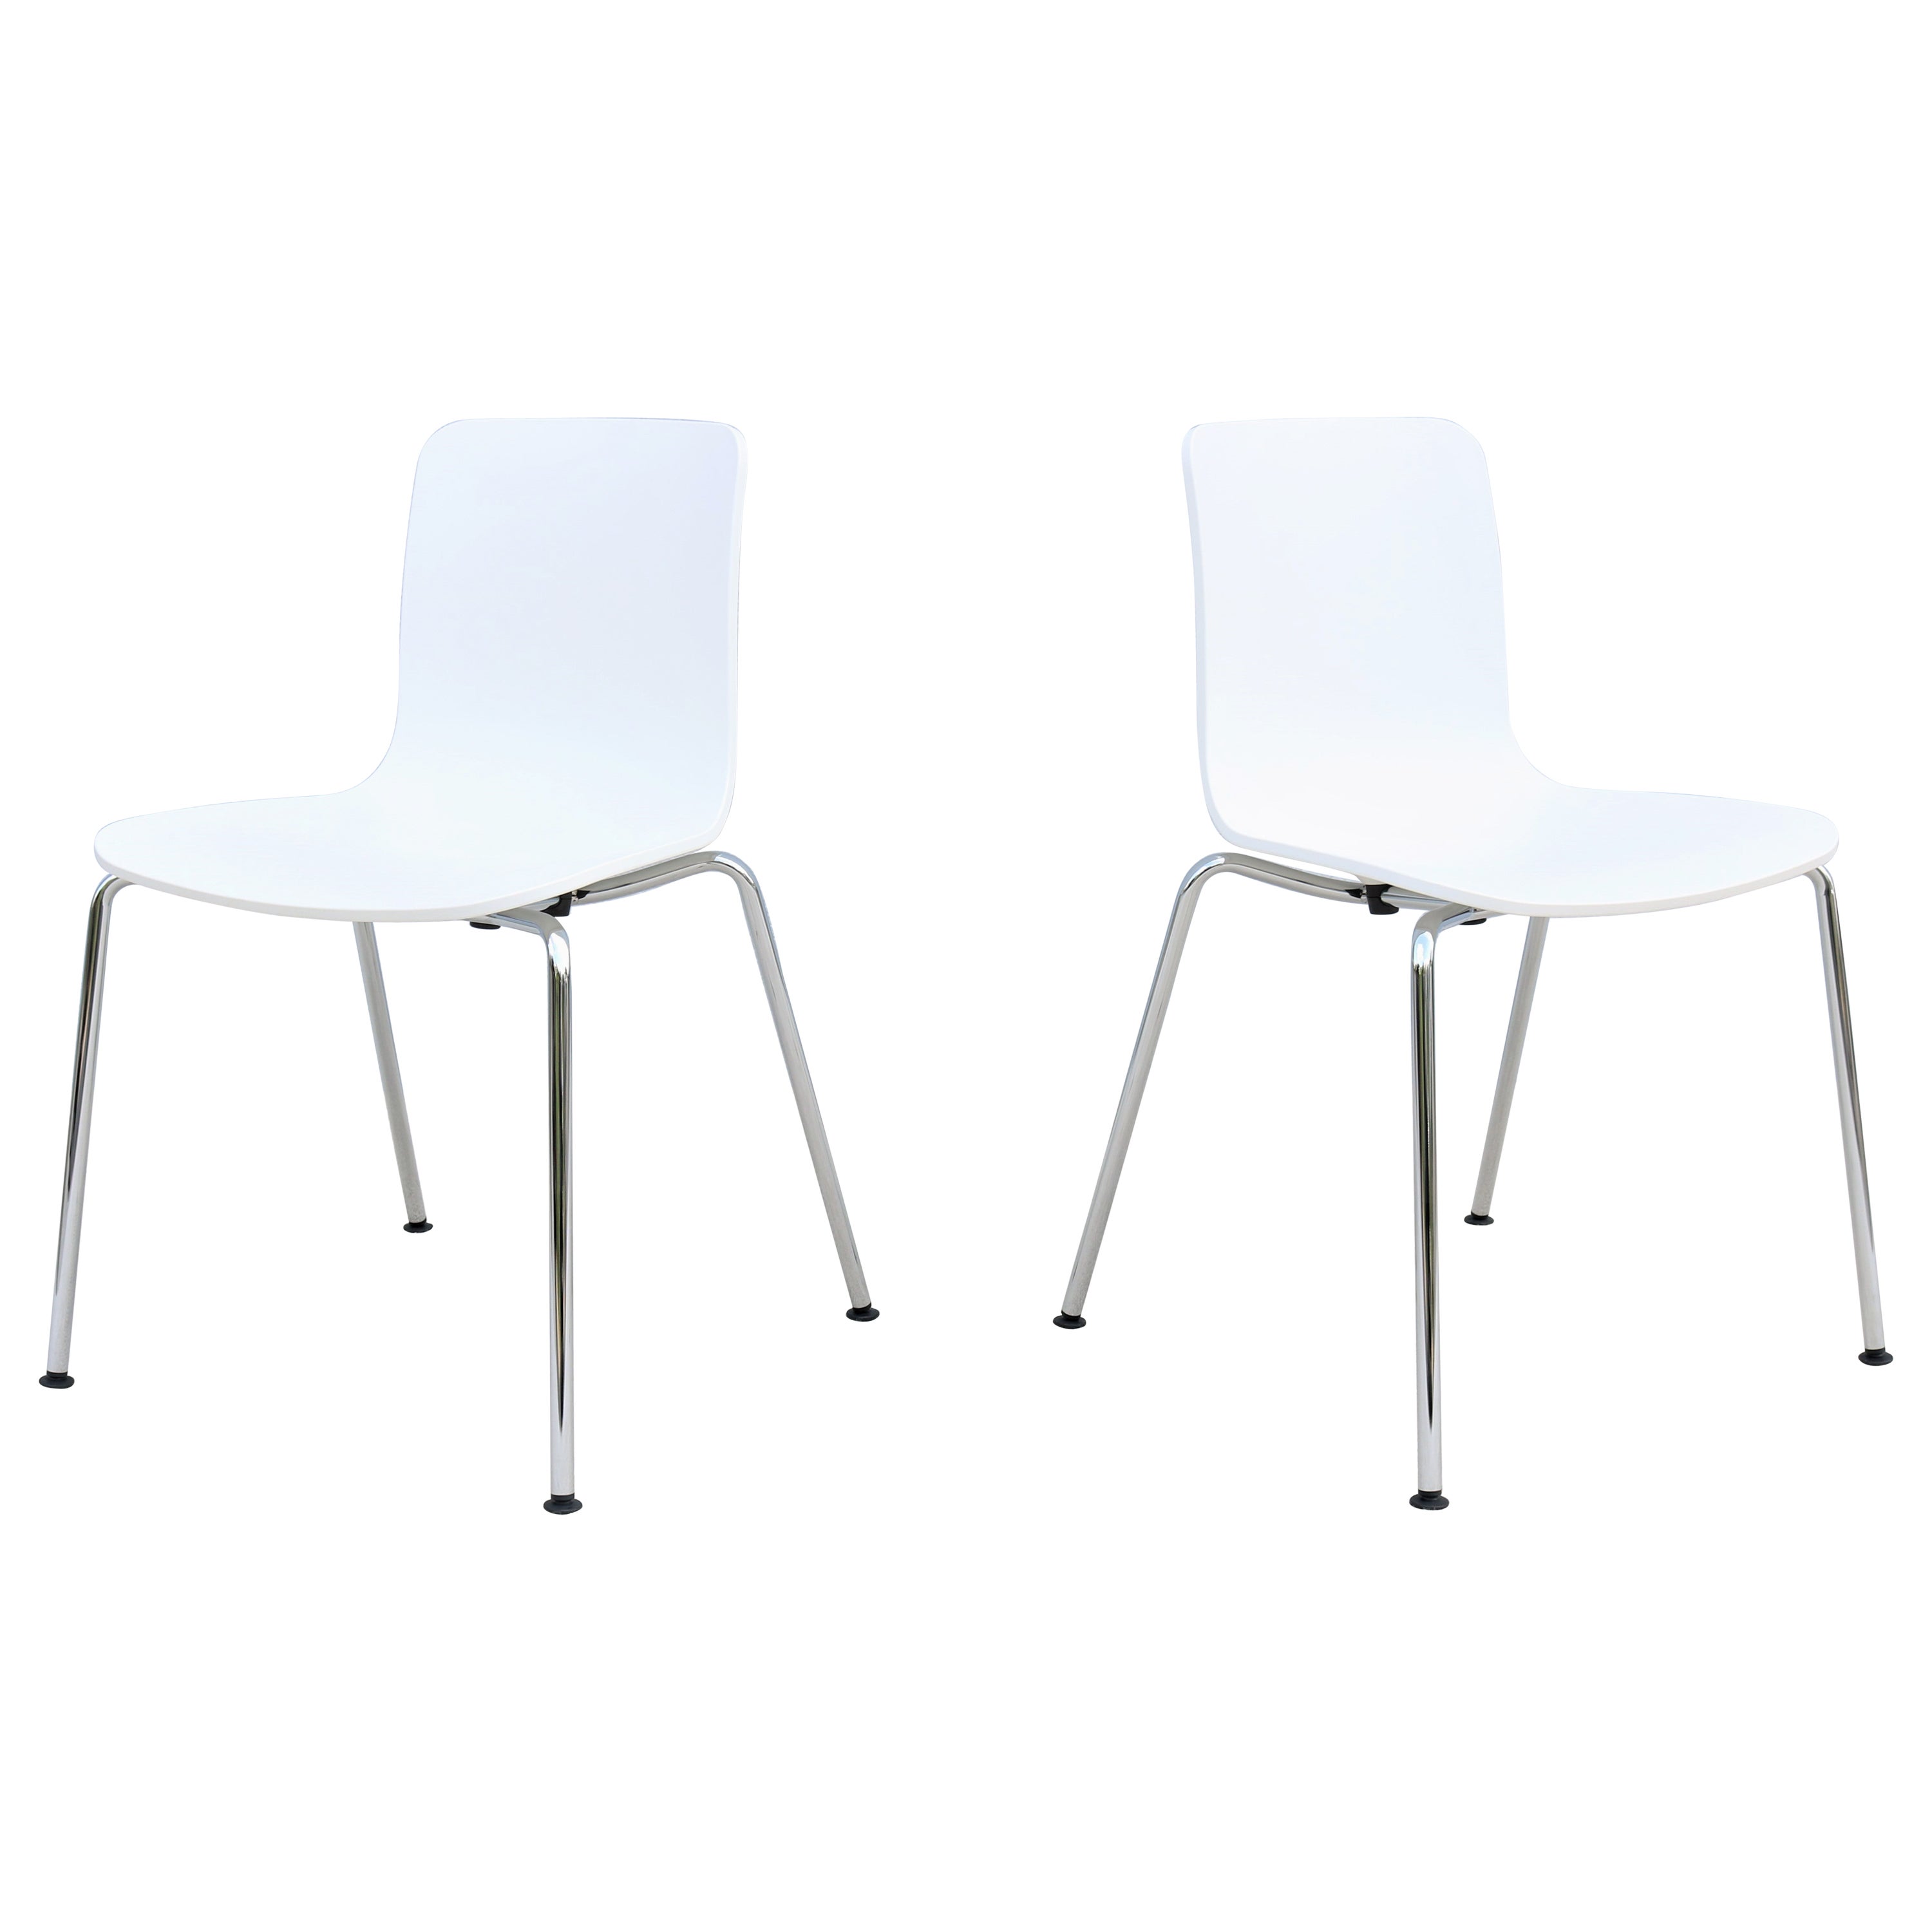 Modern Italy Jasper Morrison für Vitra HAL Tube Stackable Dining Chairs - ein Paar